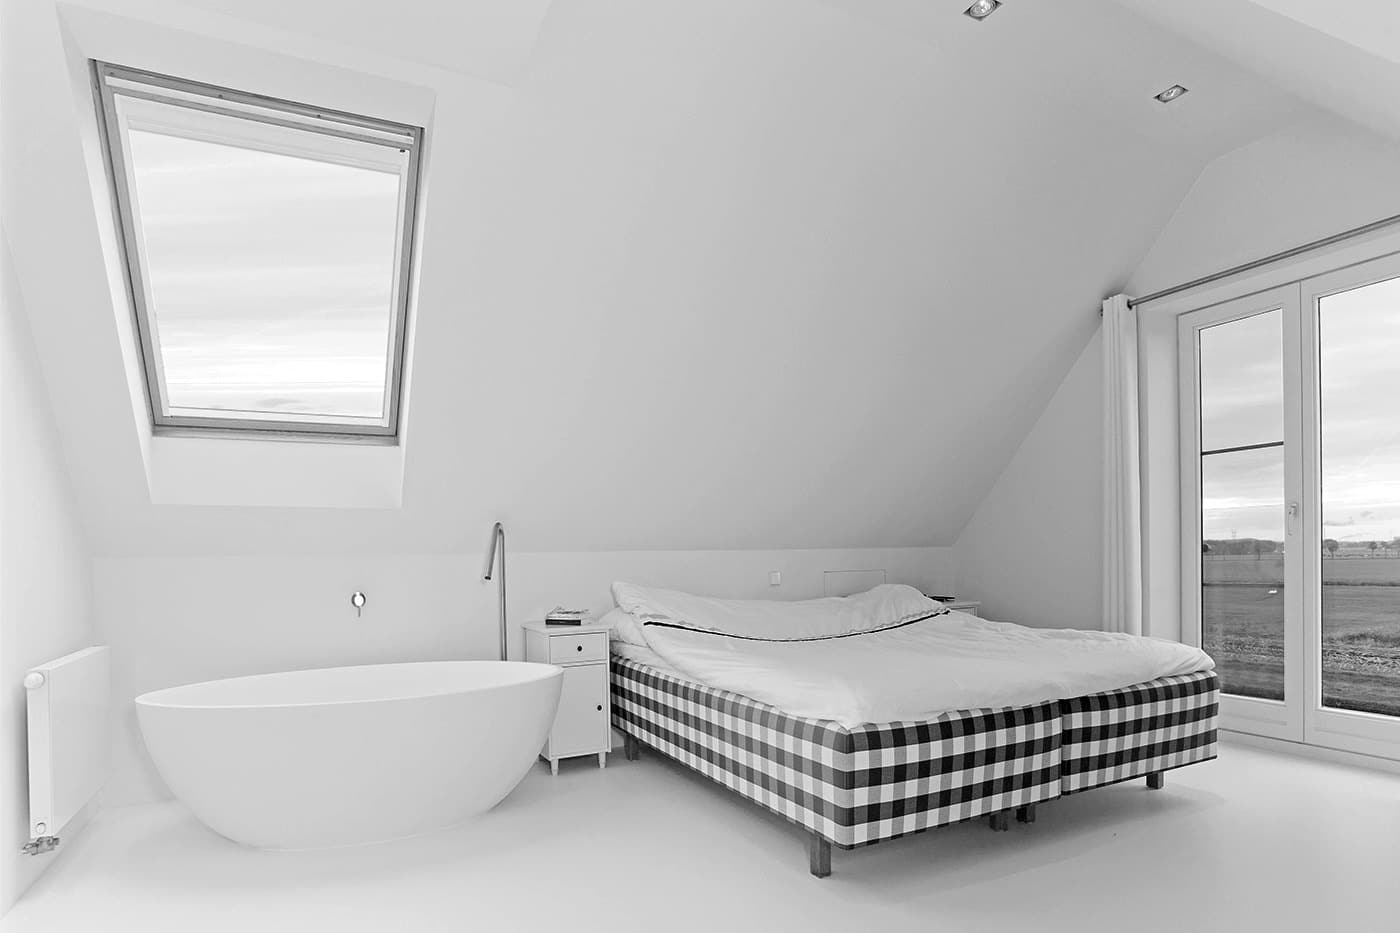 Cocoon-bath-in-bedroombad-ensuite-bathroom-freestanding-bath-tub-hastens-bed-and-bathroom